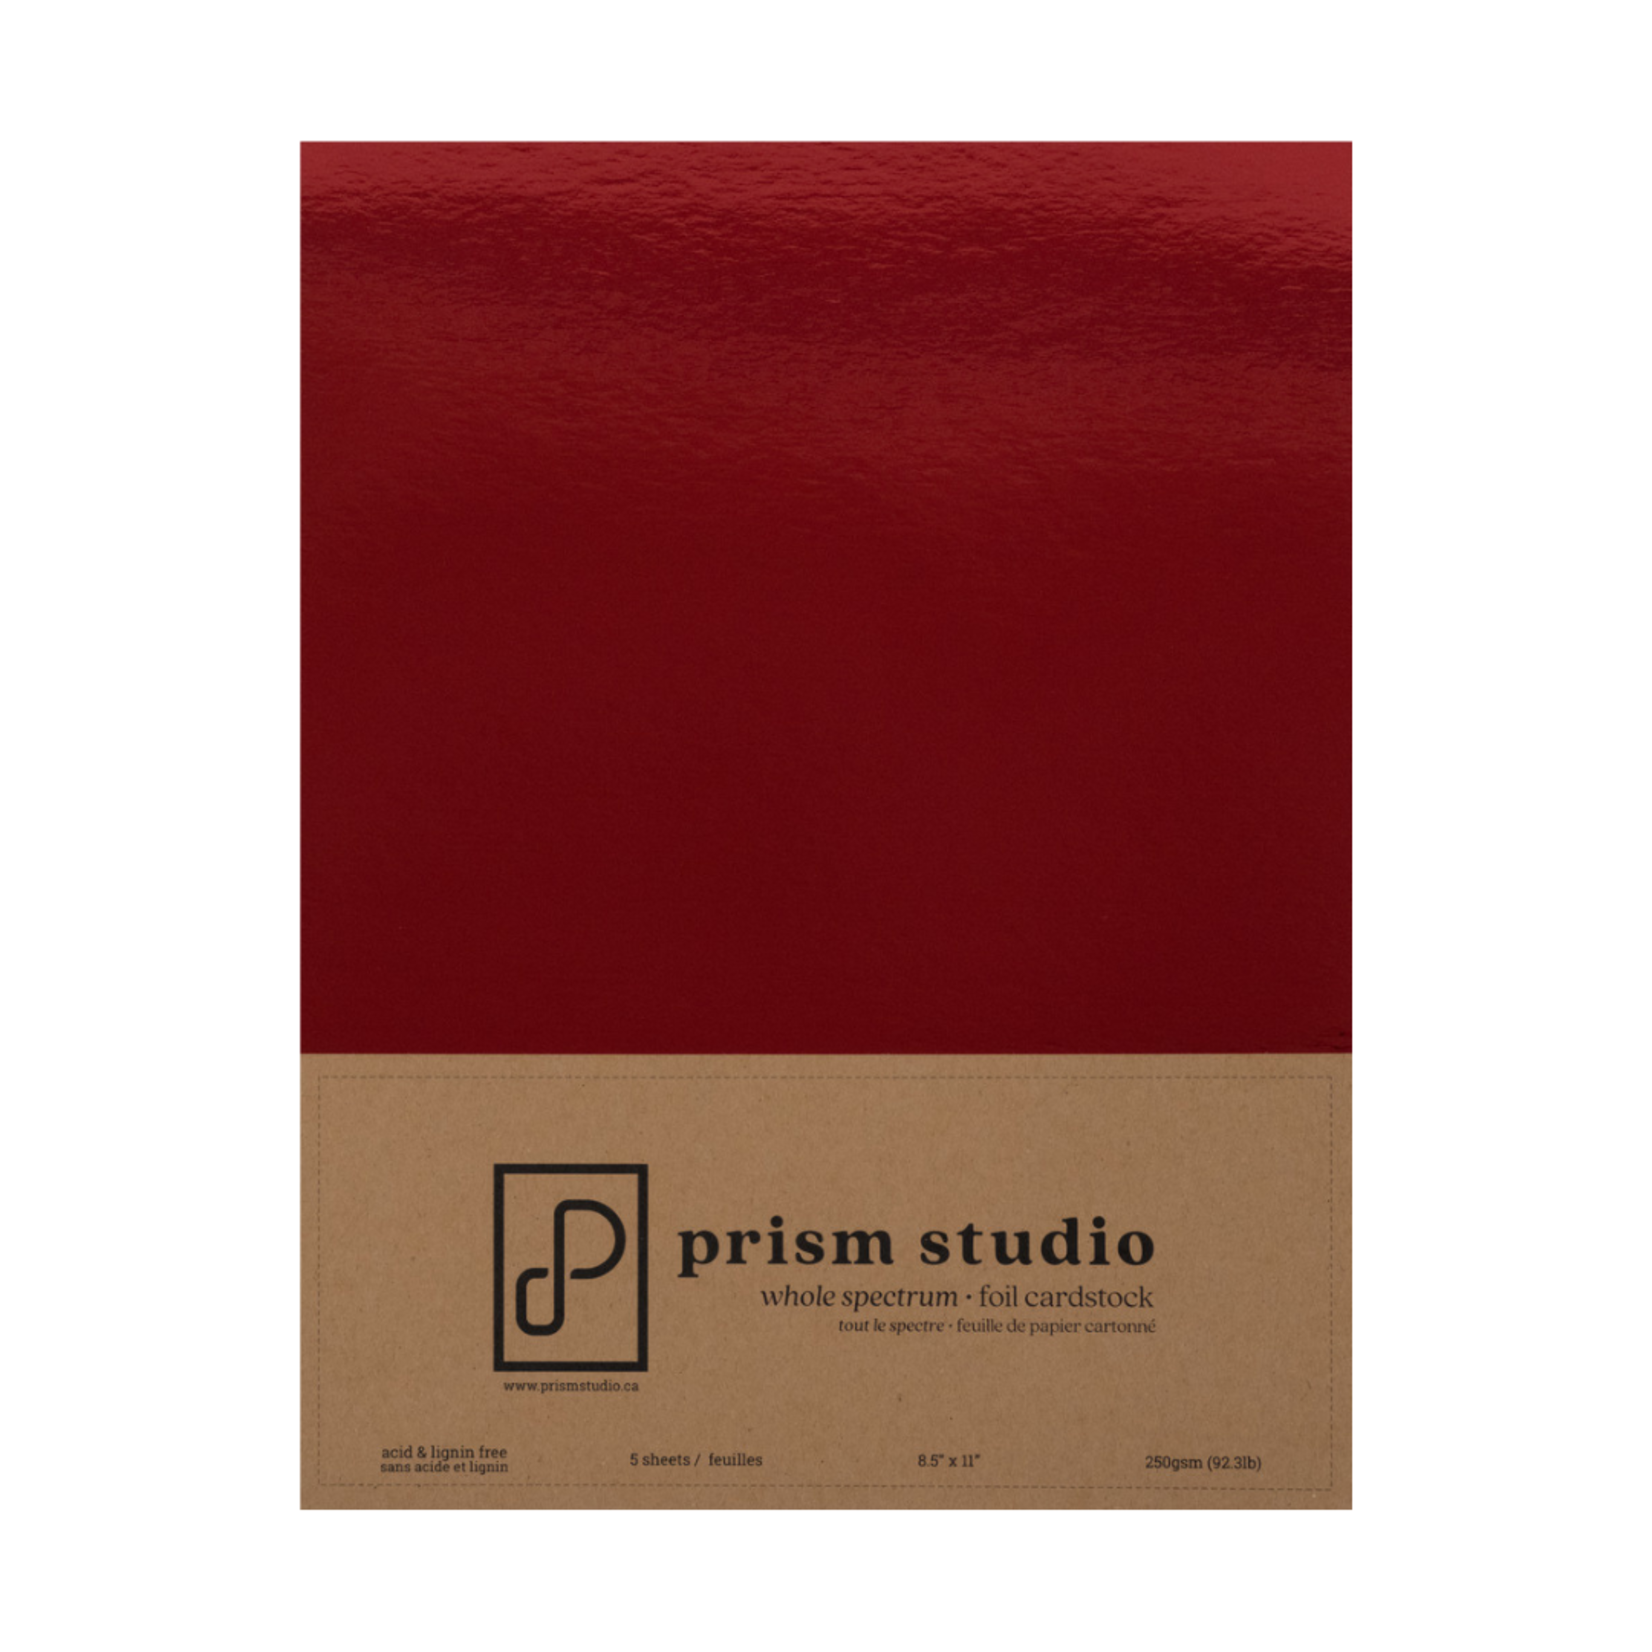 PRISM STUDIO PRISM STUDIO WHOLE SPECTRUM FOIL CARDSTOCK 8.5X11 RUBY